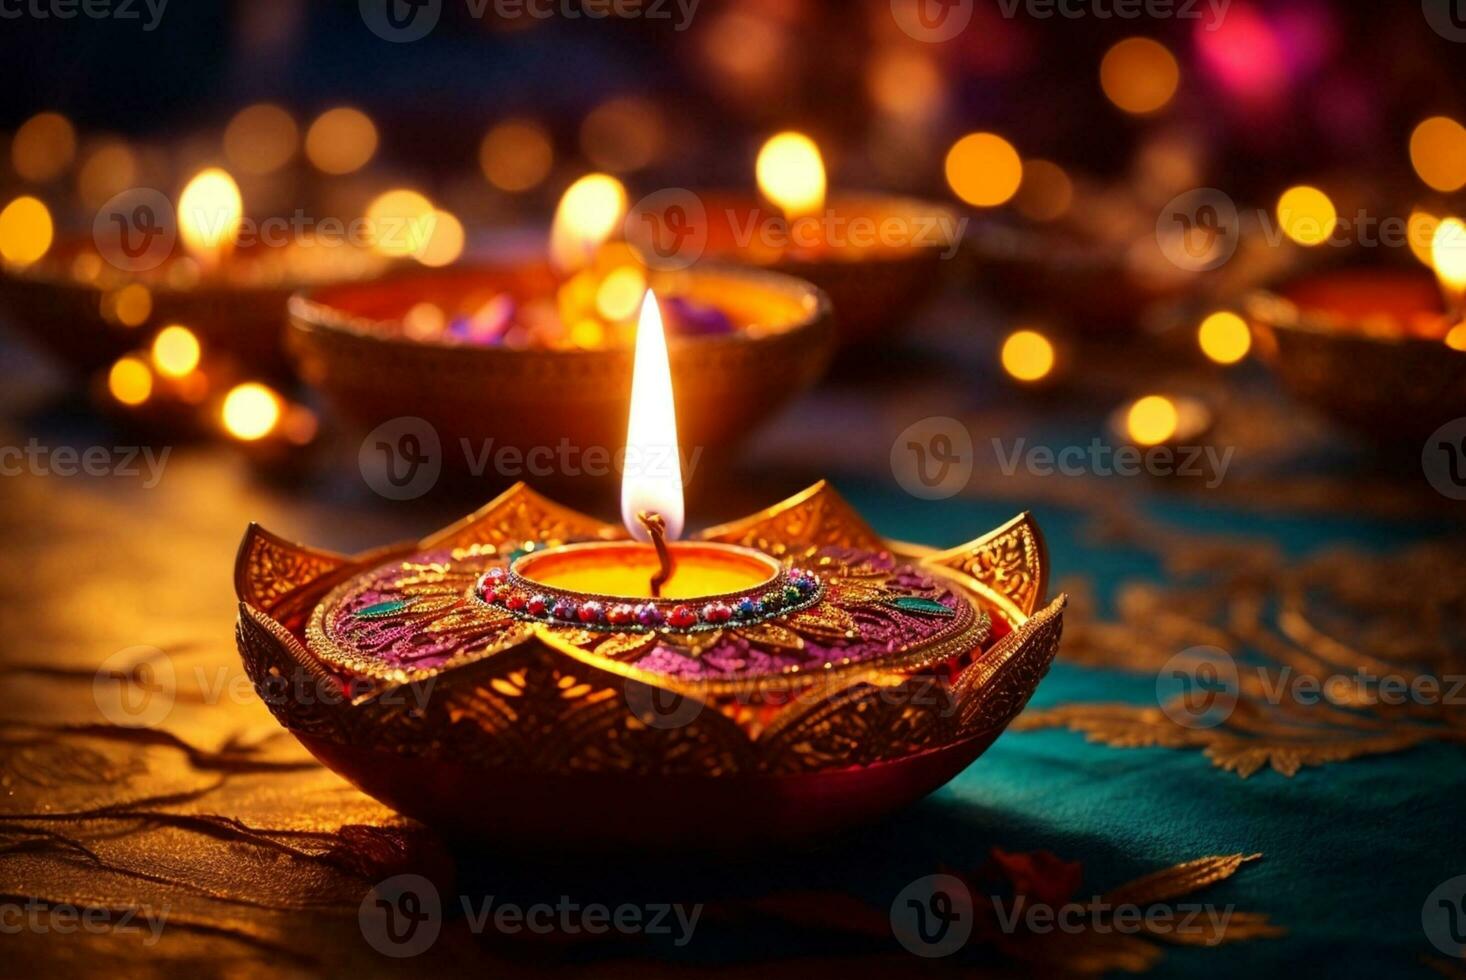 diwali eller deepavali - lera diya lampor belyst under diwali firande i Indien. ai generativ foto